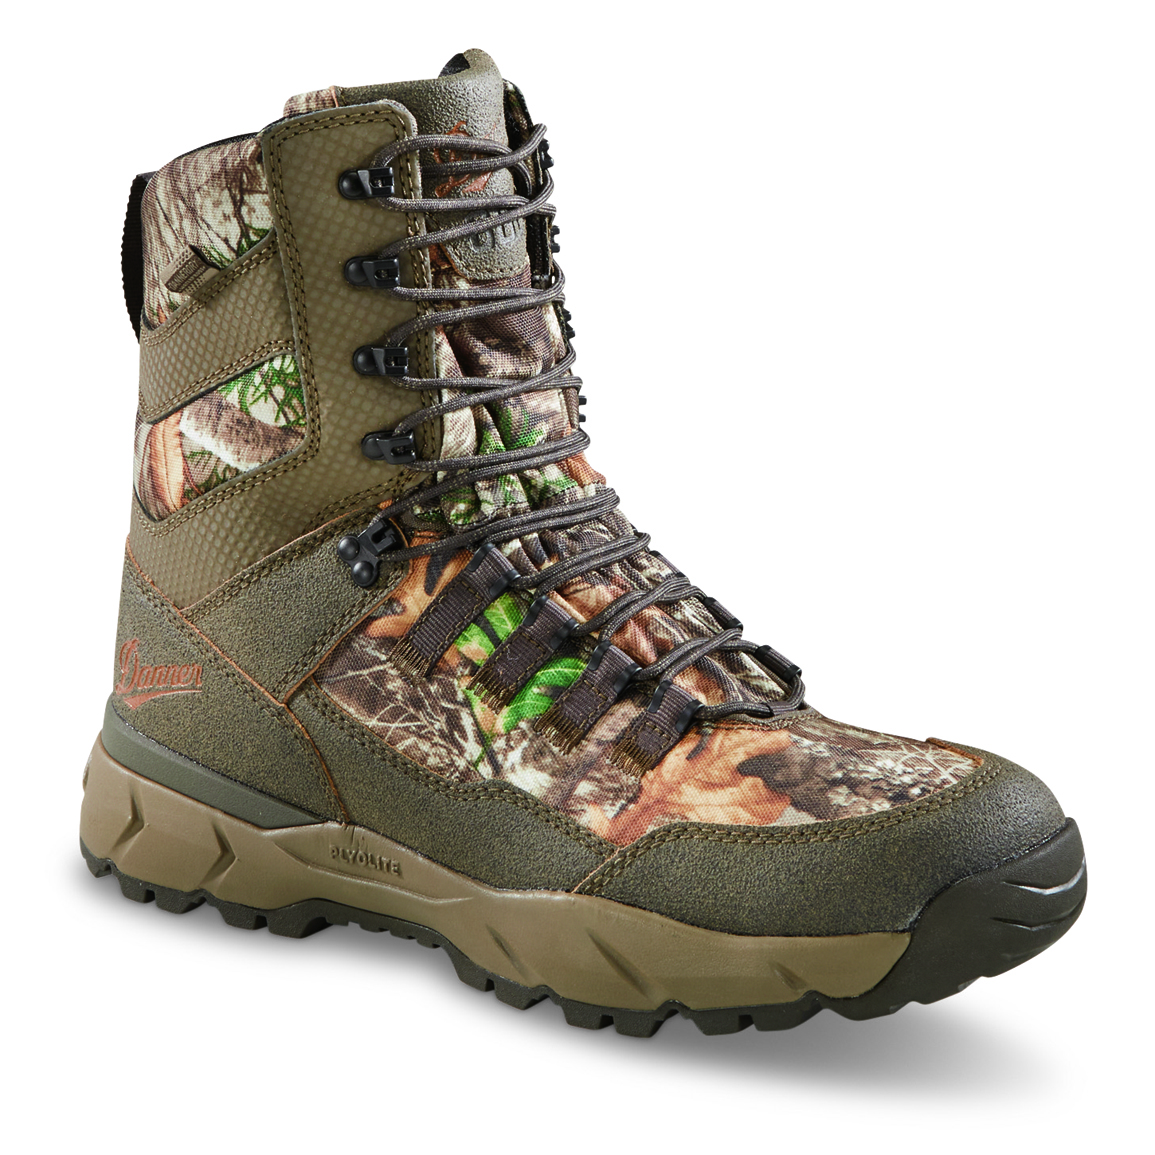 Danner Men's 8" Vital Waterproof Insulated Hunting Boots, 800-gram